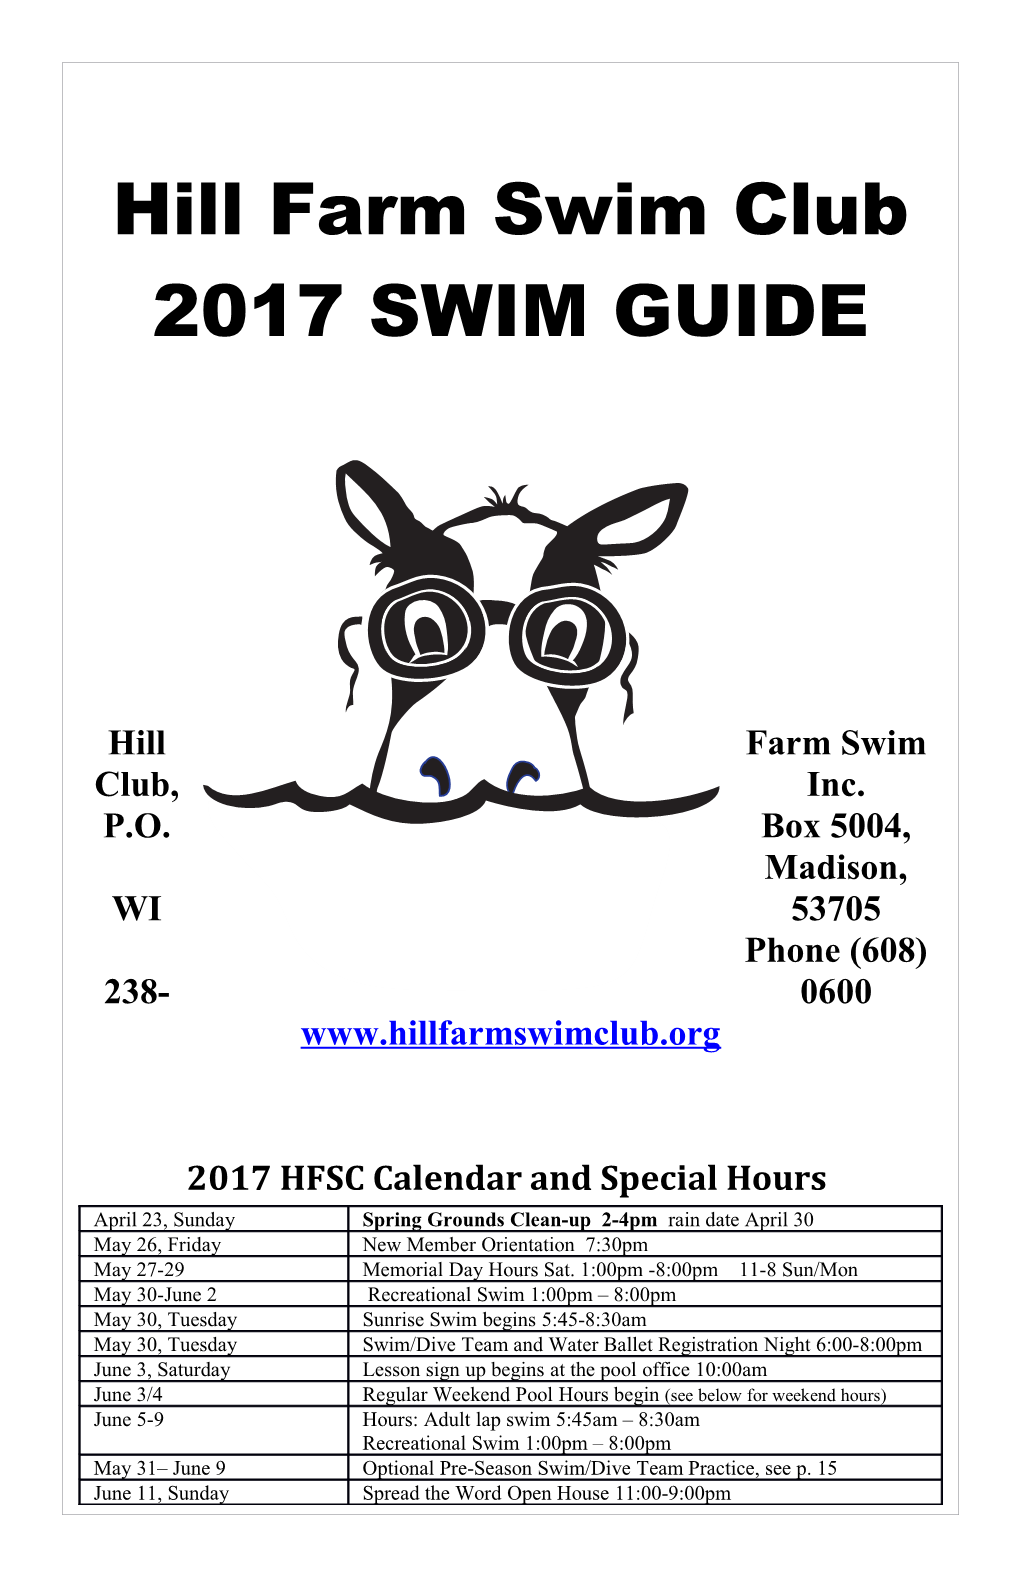 Hill Farm Swim Club, Inc